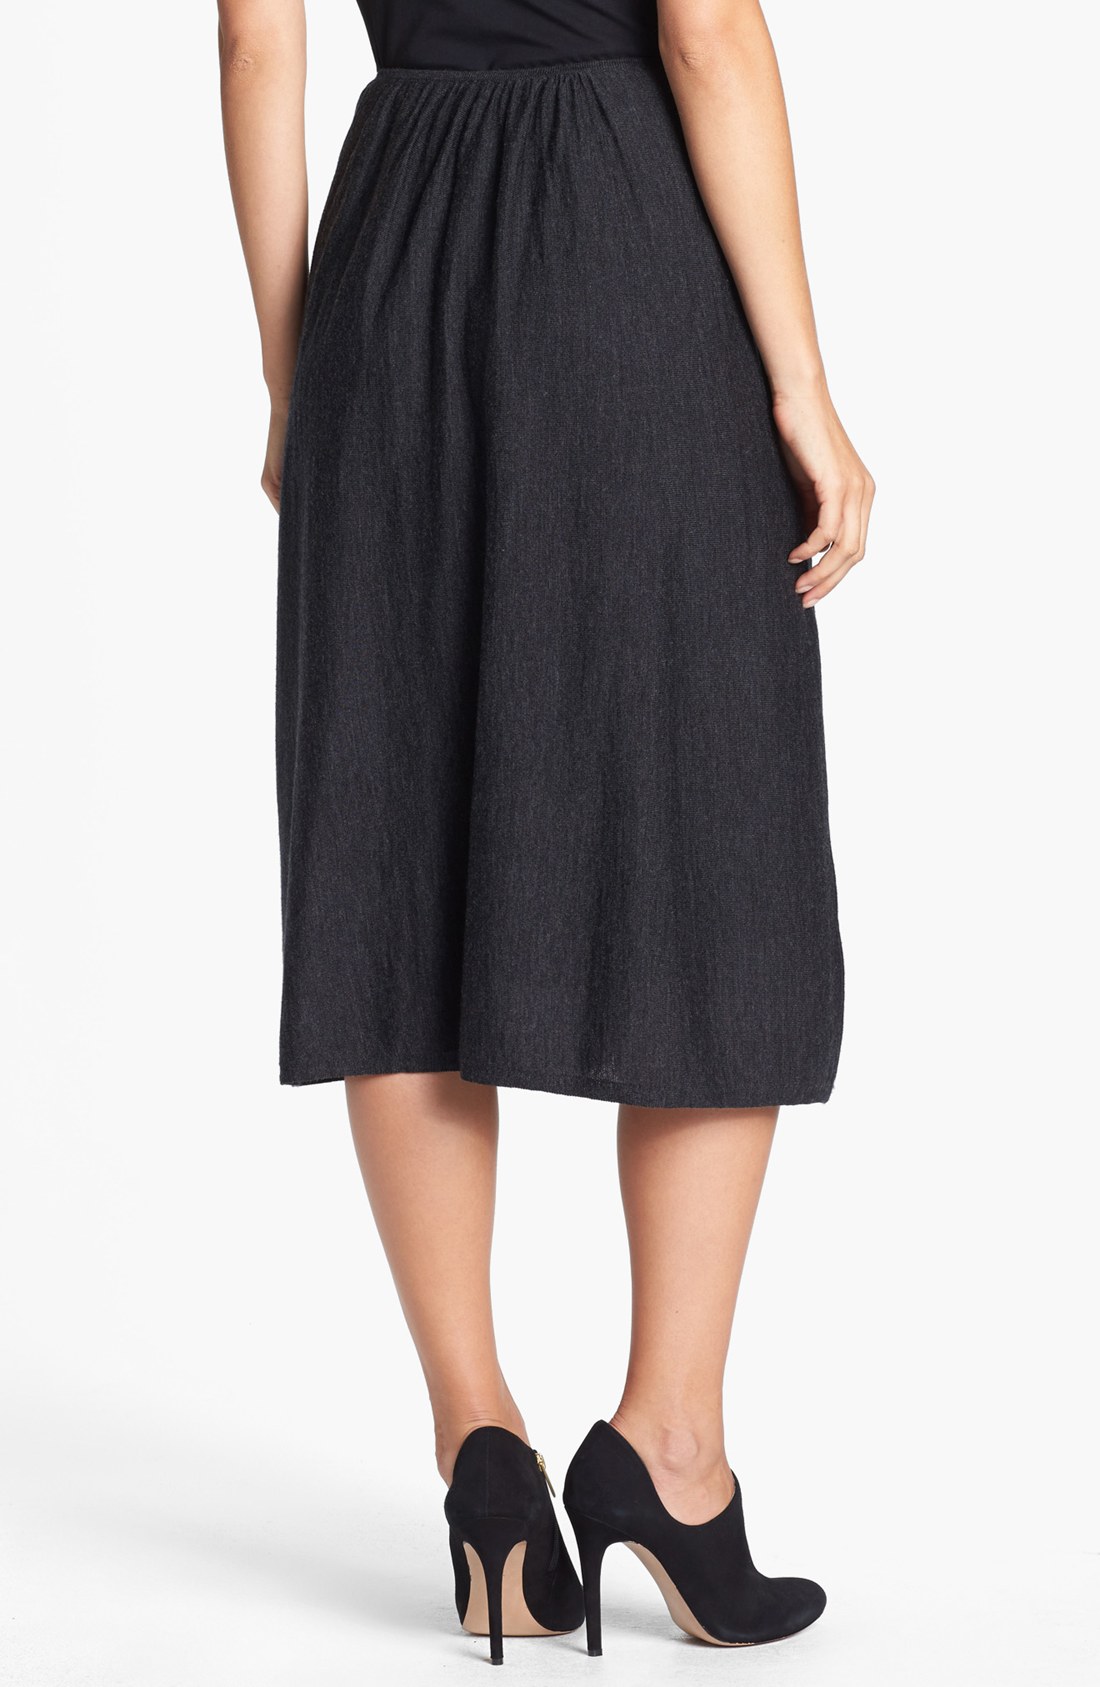 Eileen fisher Merino Wool Jersey Skirt in Gray (Charcoal) | Lyst